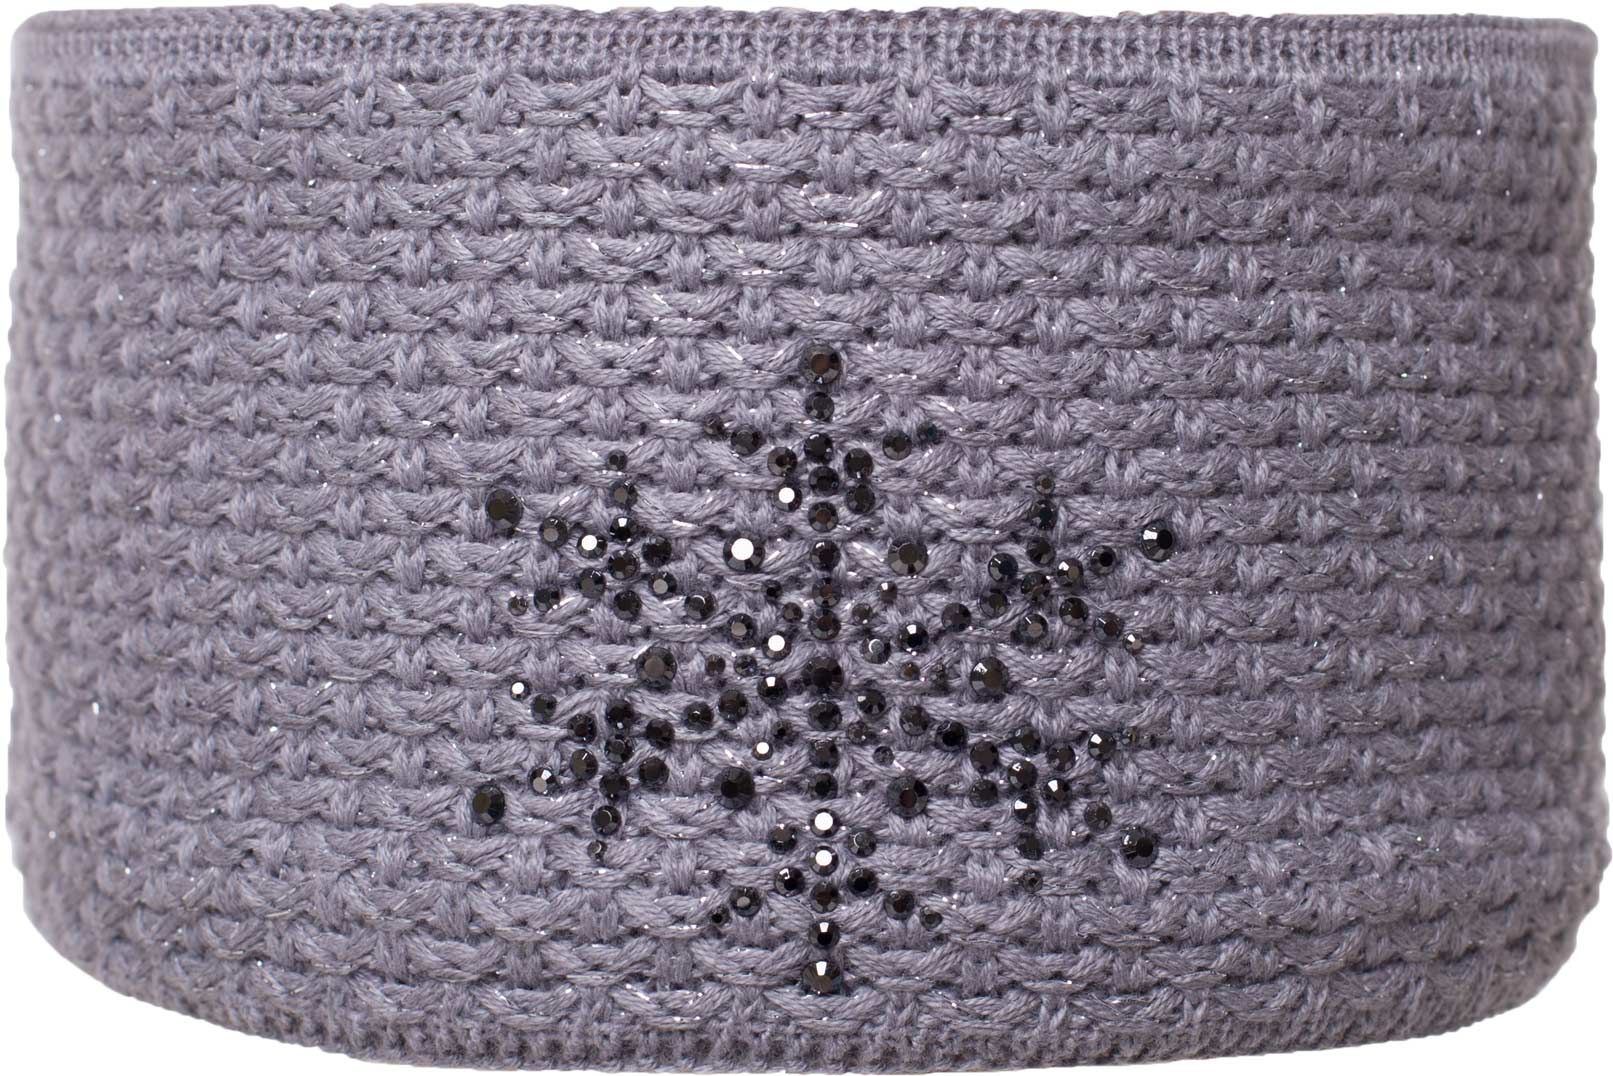 Women’s knitted headband